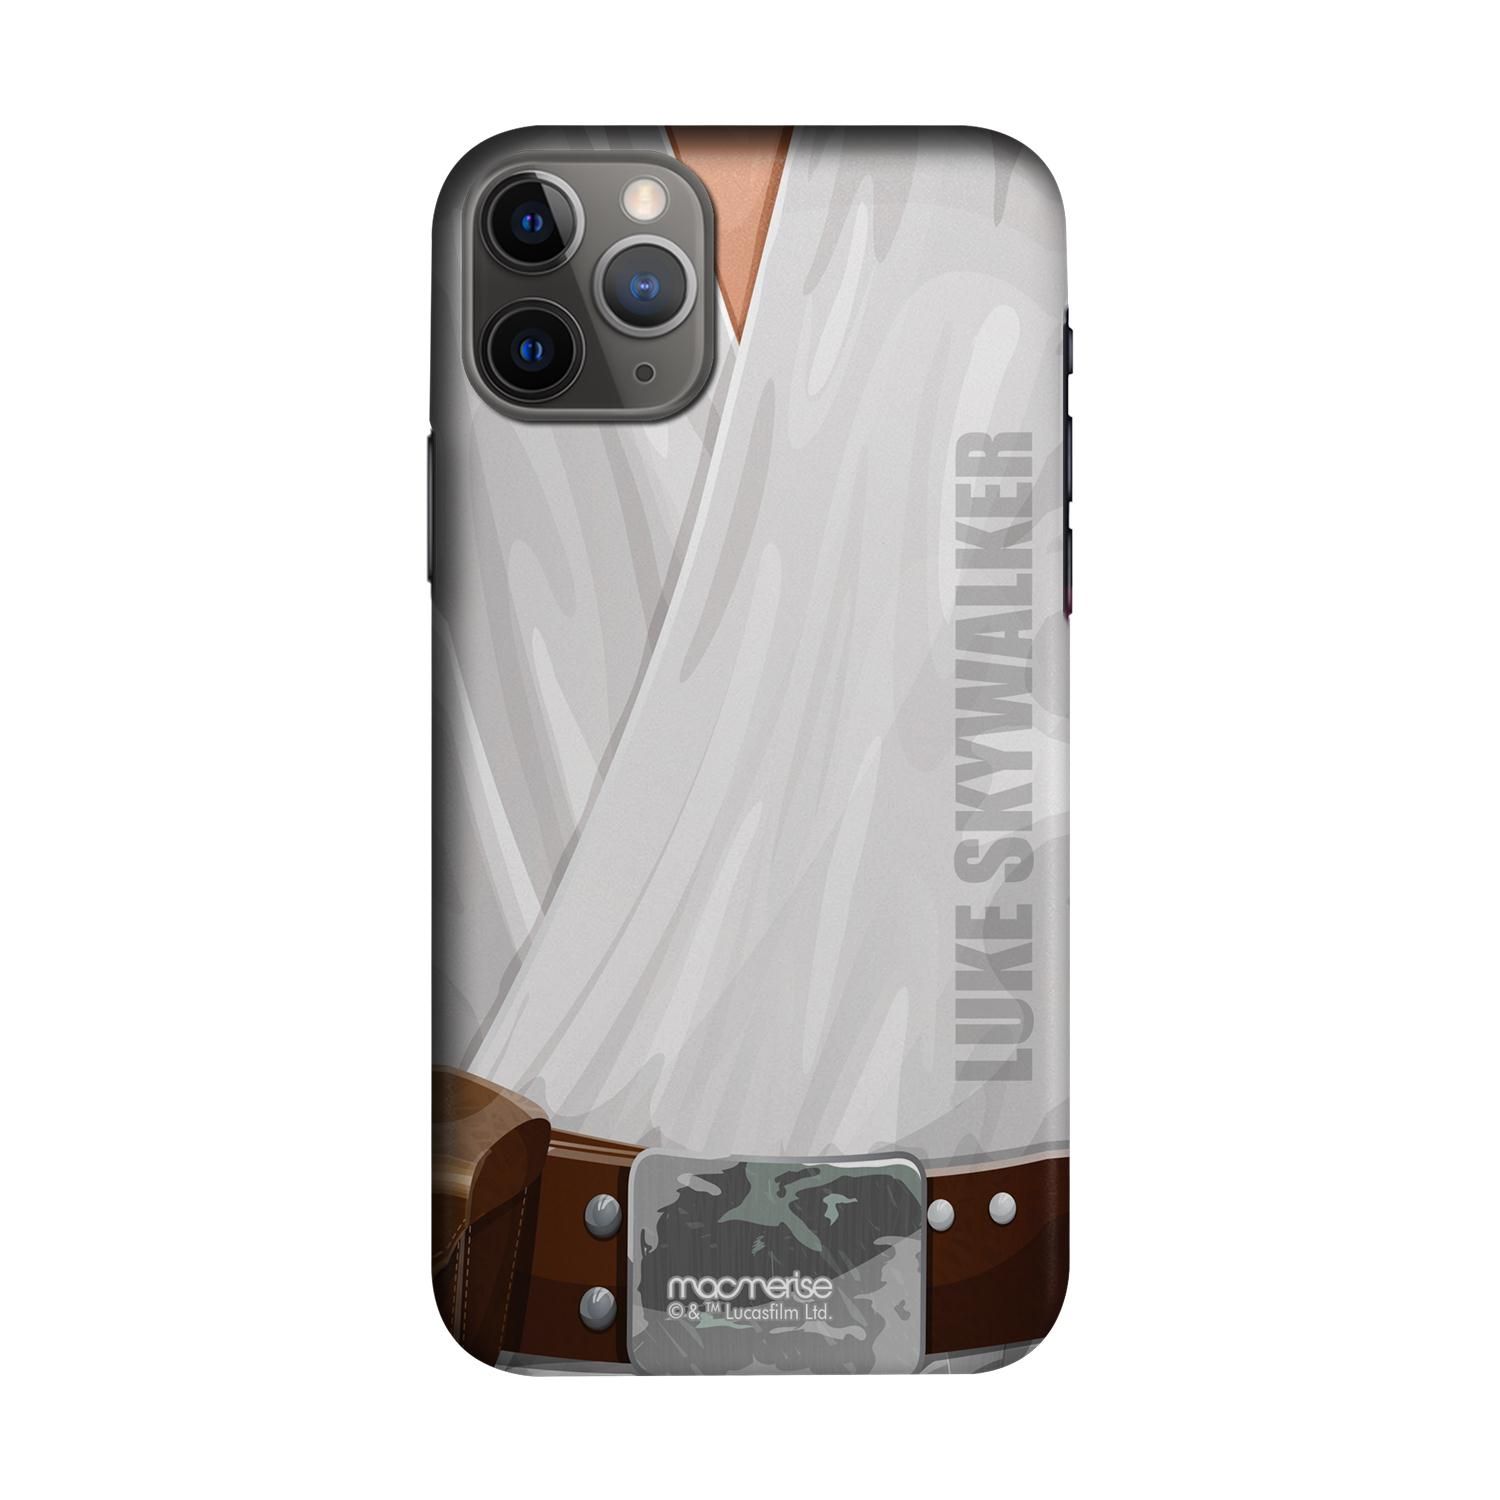 Buy Attire Luke - Sleek Phone Case for iPhone 11 Pro Max Online